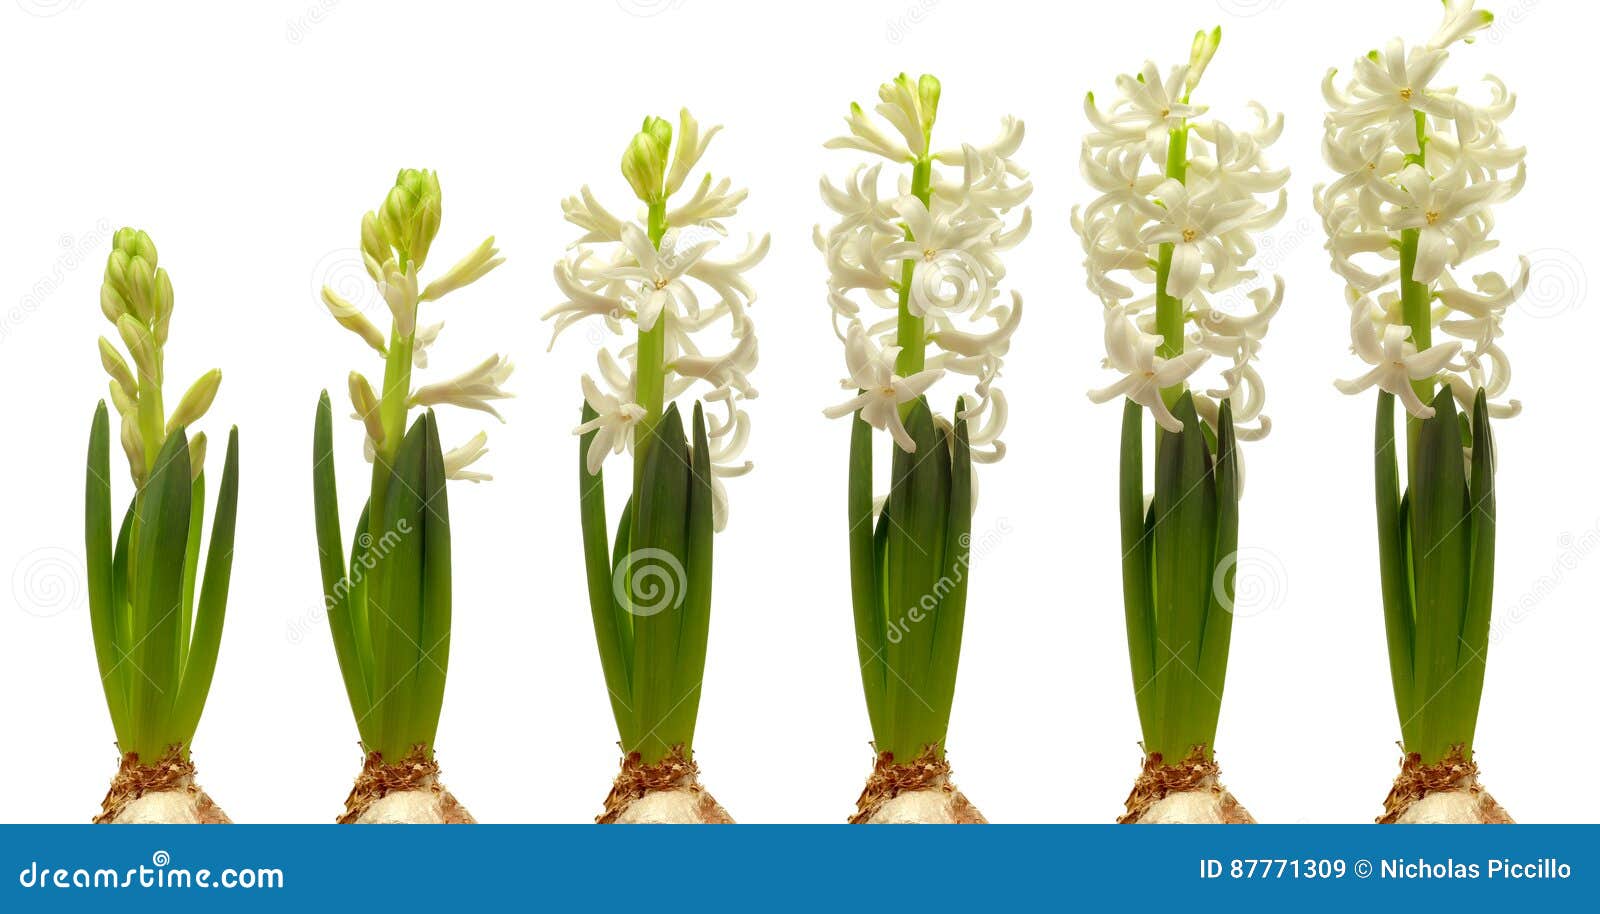 Hyacinth Flower Series immagine stock. Immagine di isolato - 87771309